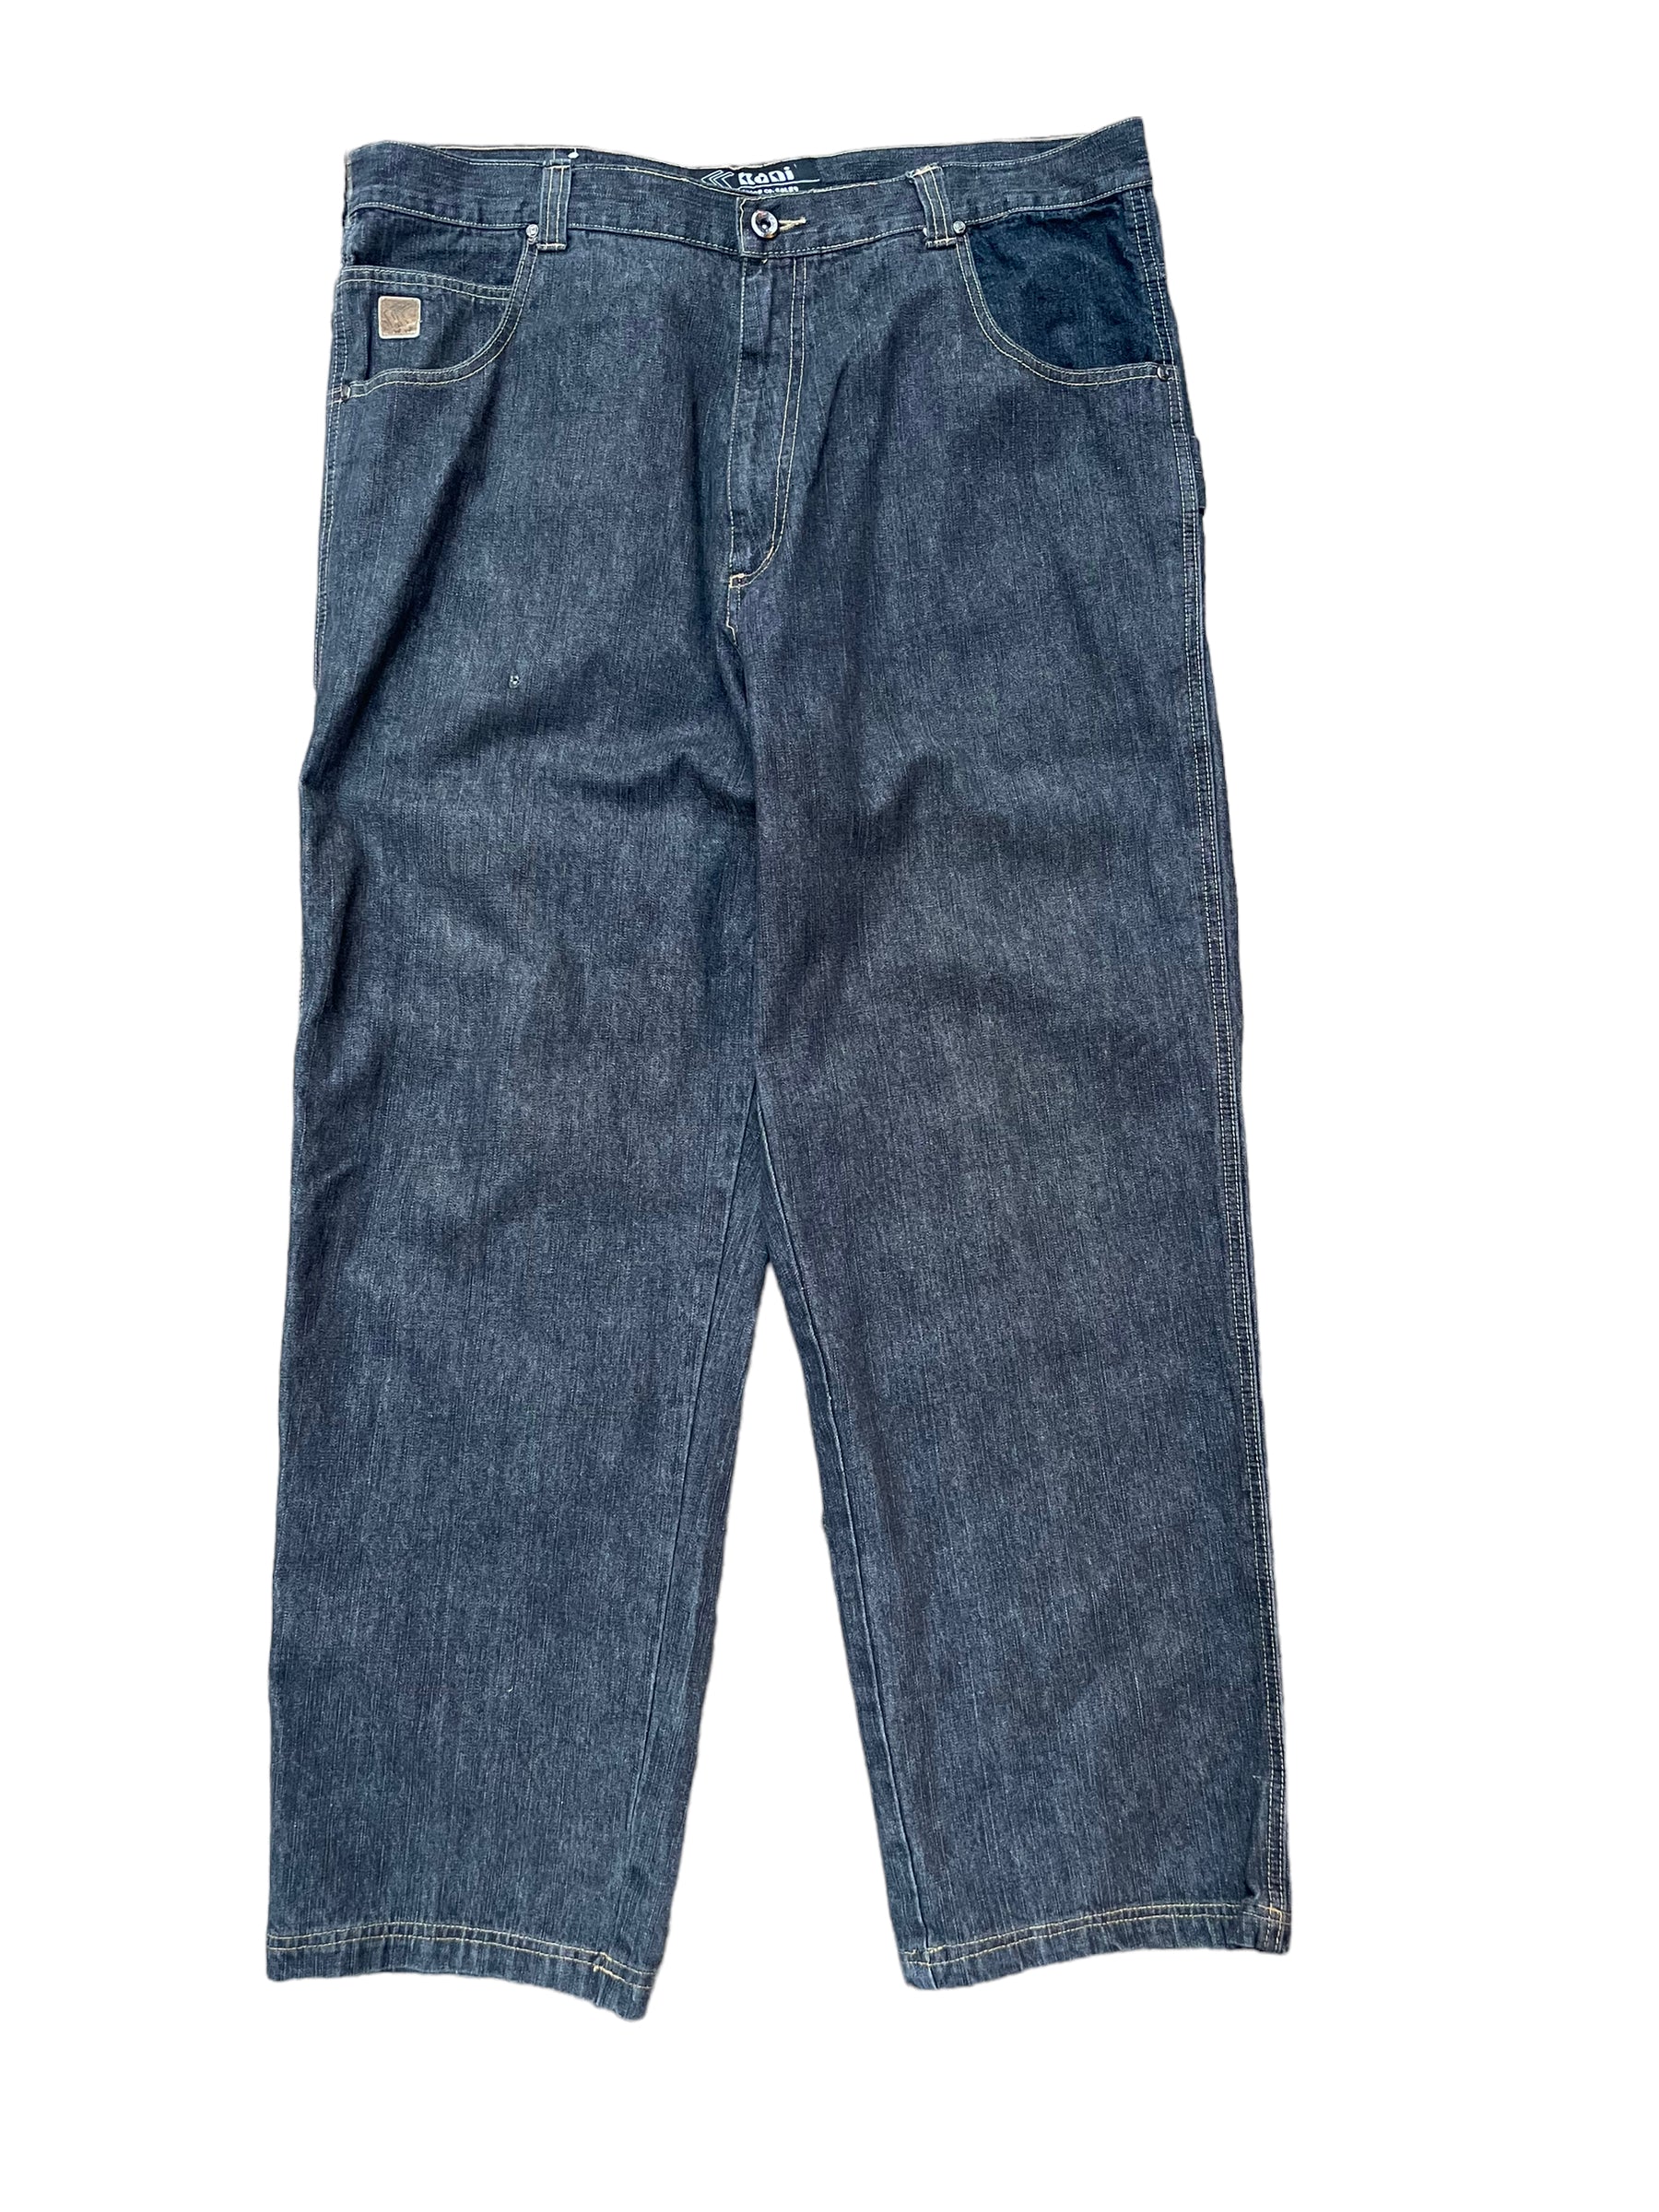 Vintage Kani 90s Baggy Jeans